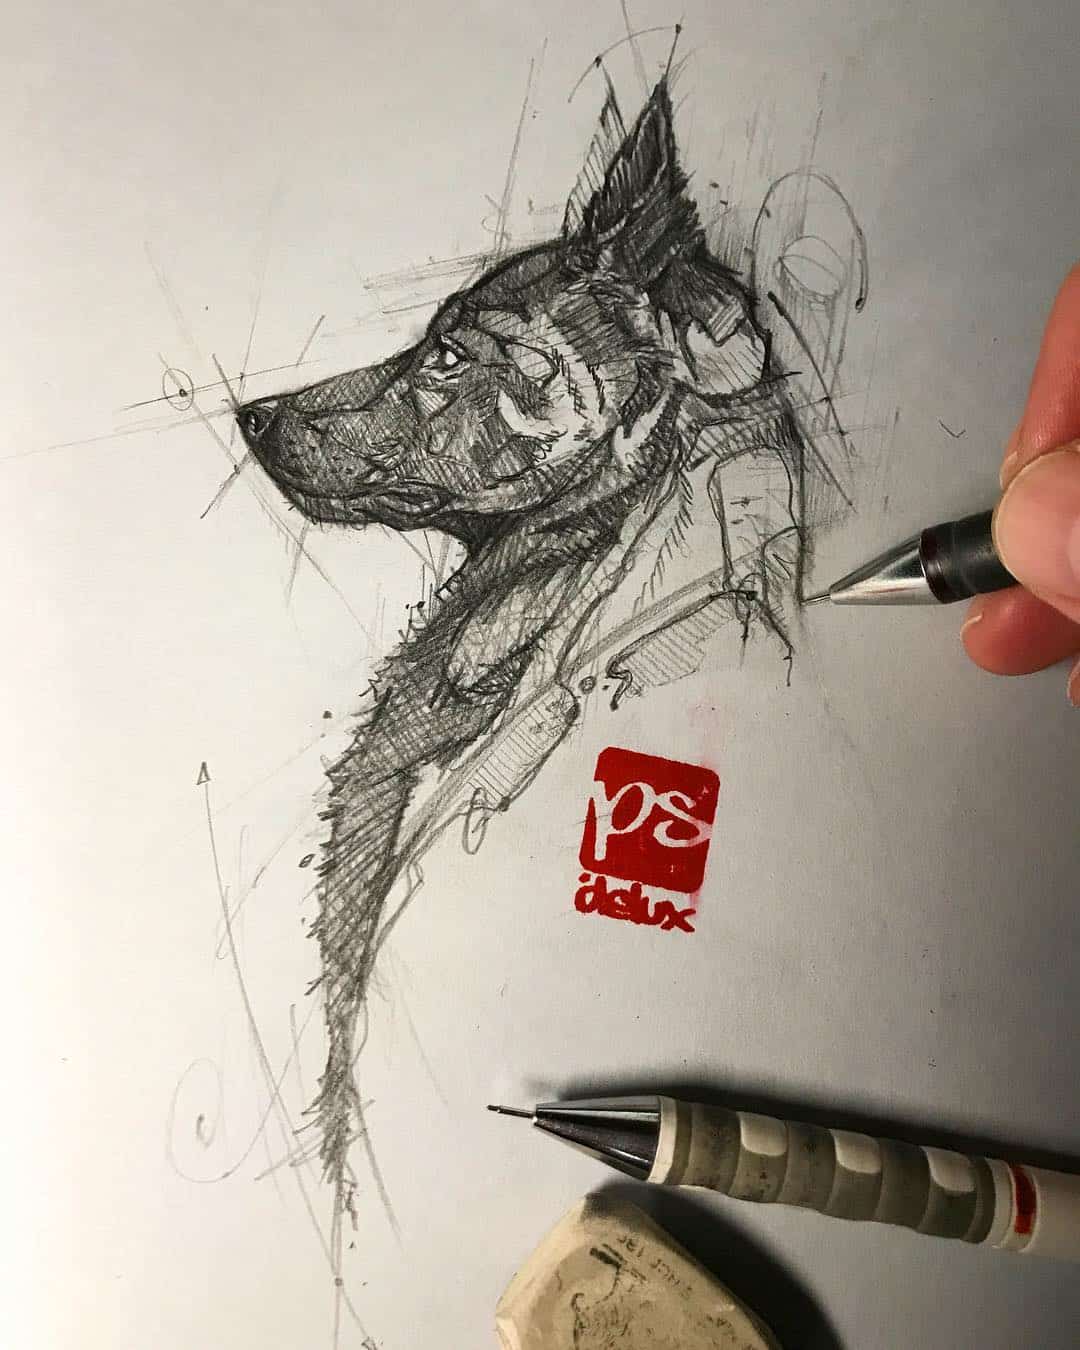 Pencil sketch artist Psdelux